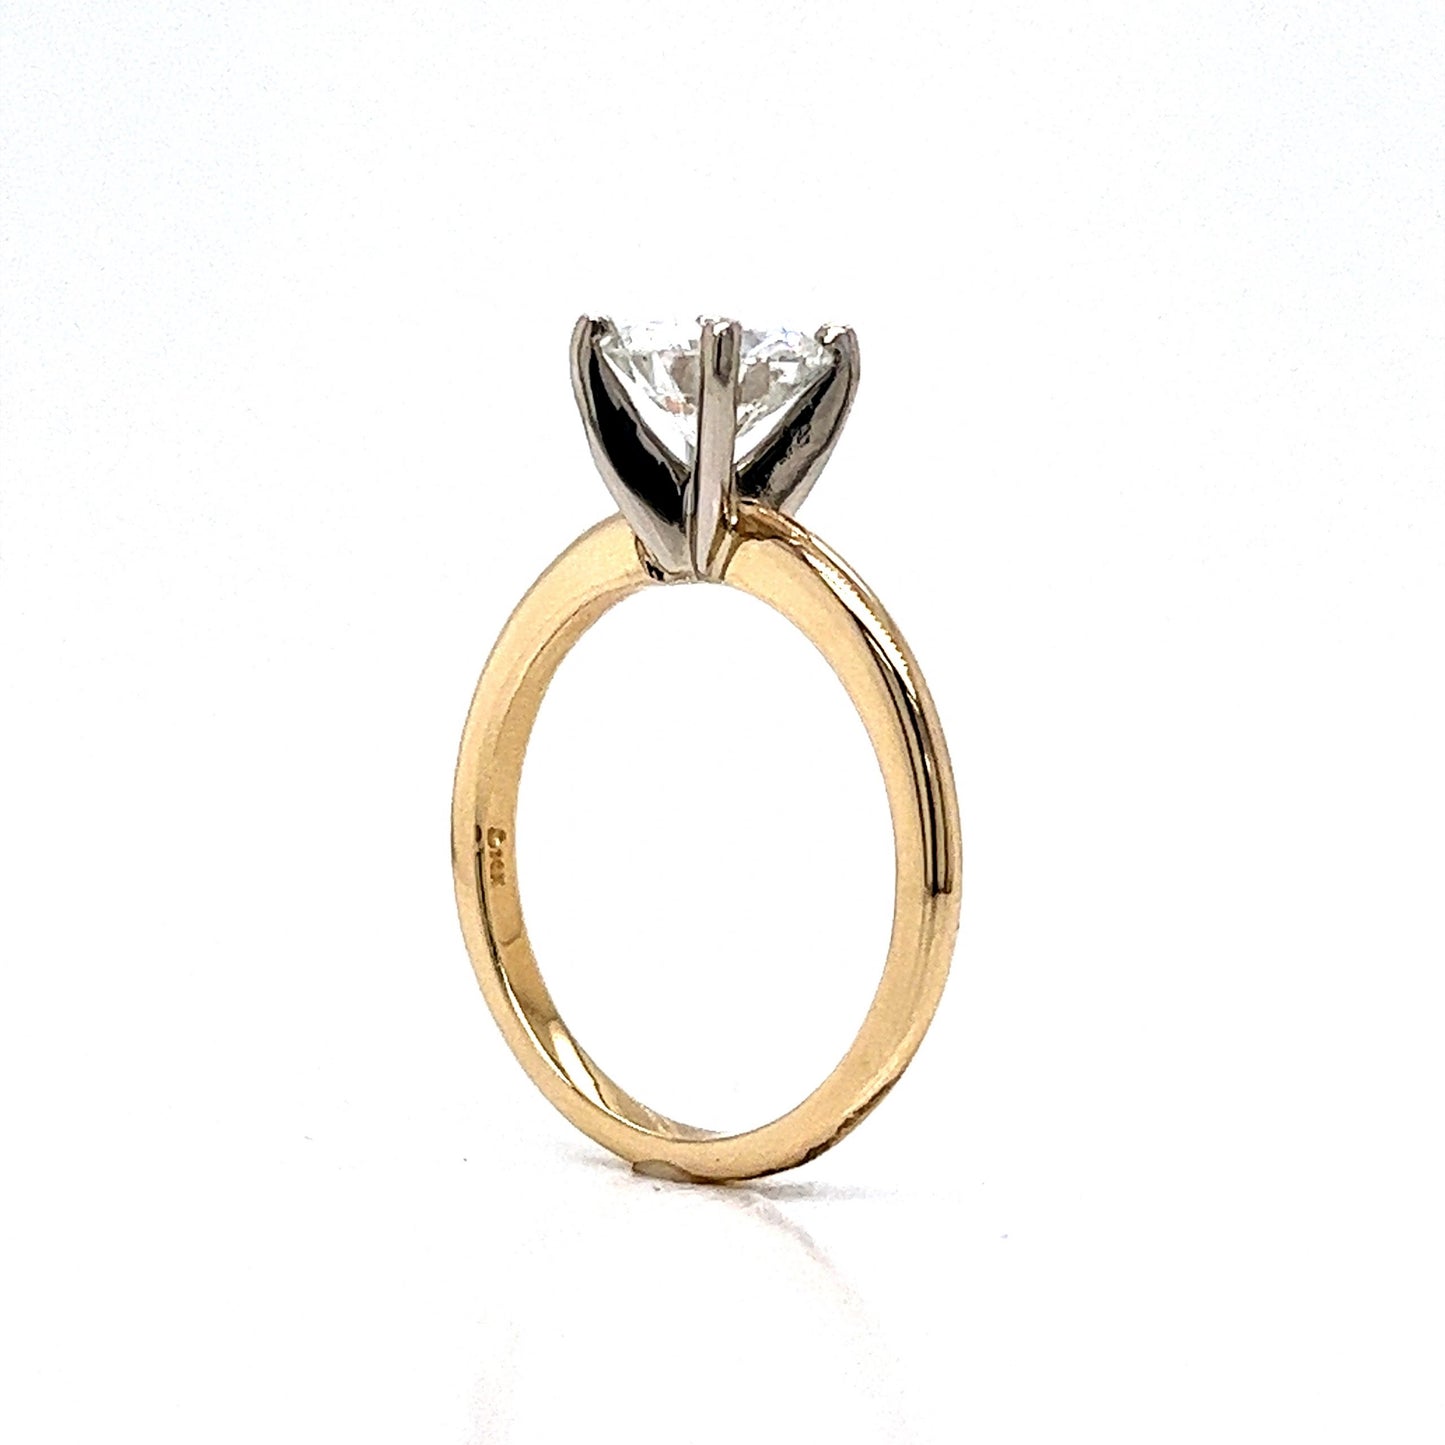 1.28 Round Brilliant Cut Diamond Engagement Ring in 14k Gold